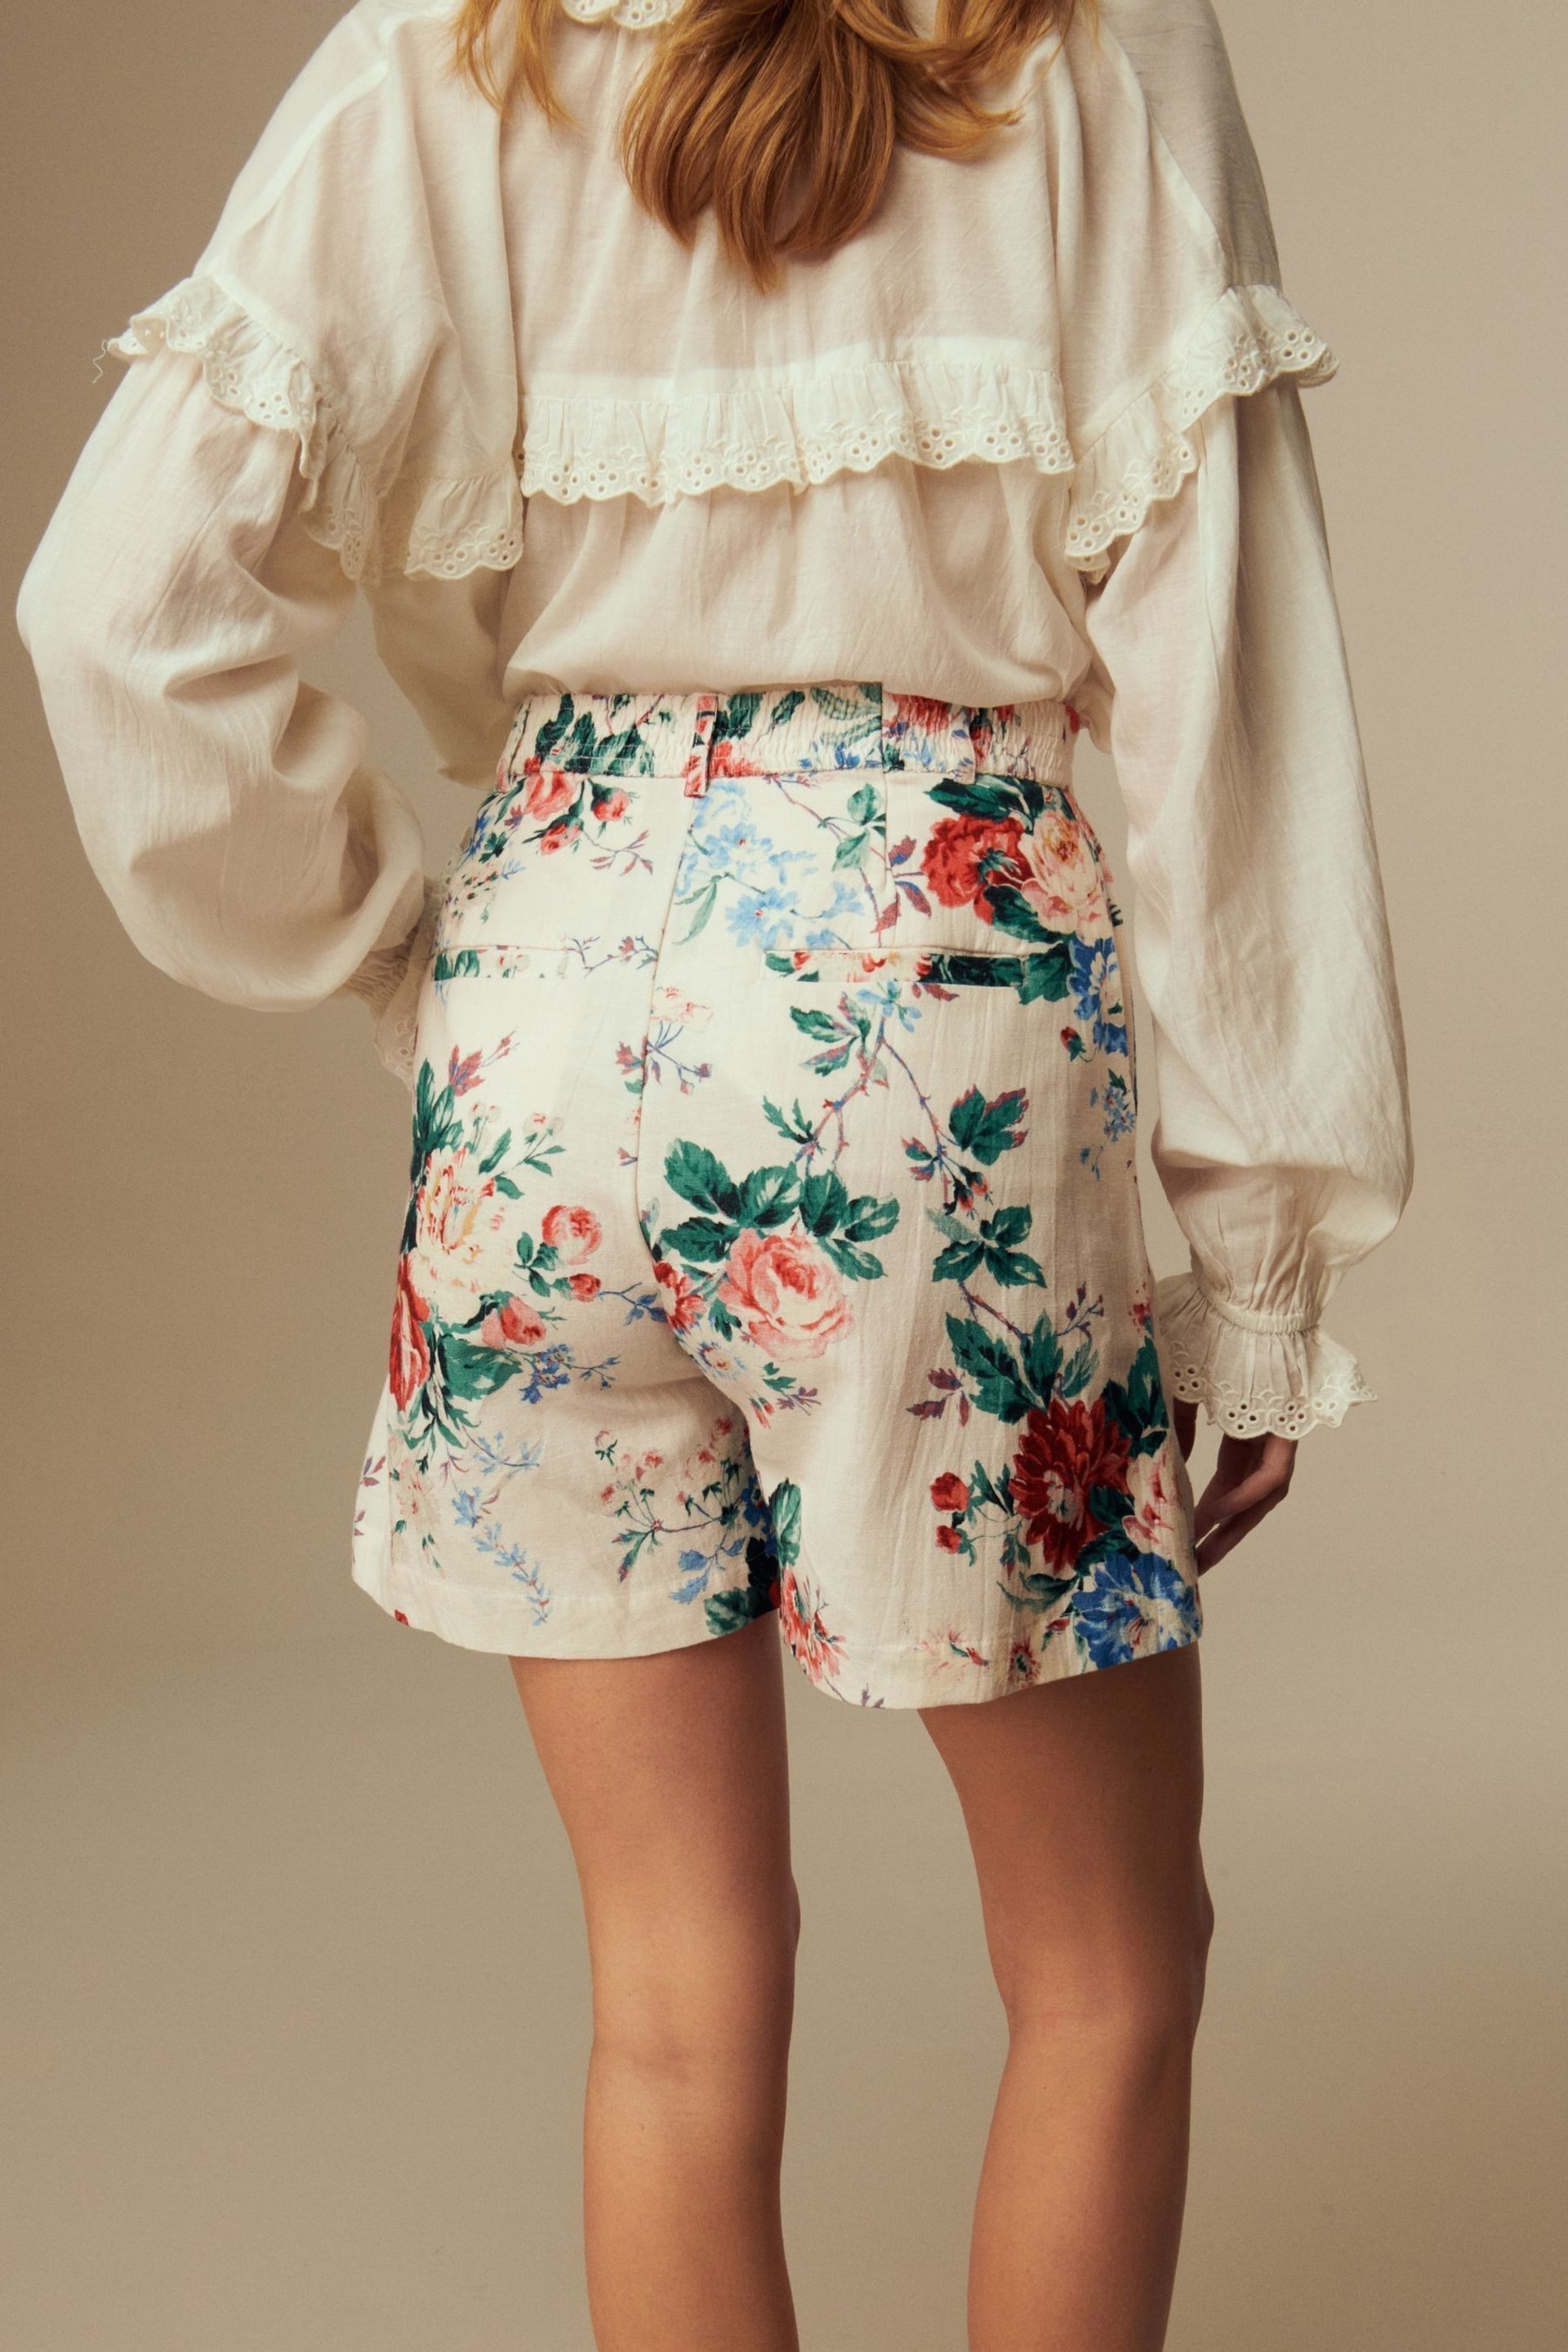 Laura Ashley Cream Linen Blend Floral Shorts - Image 2 of 5